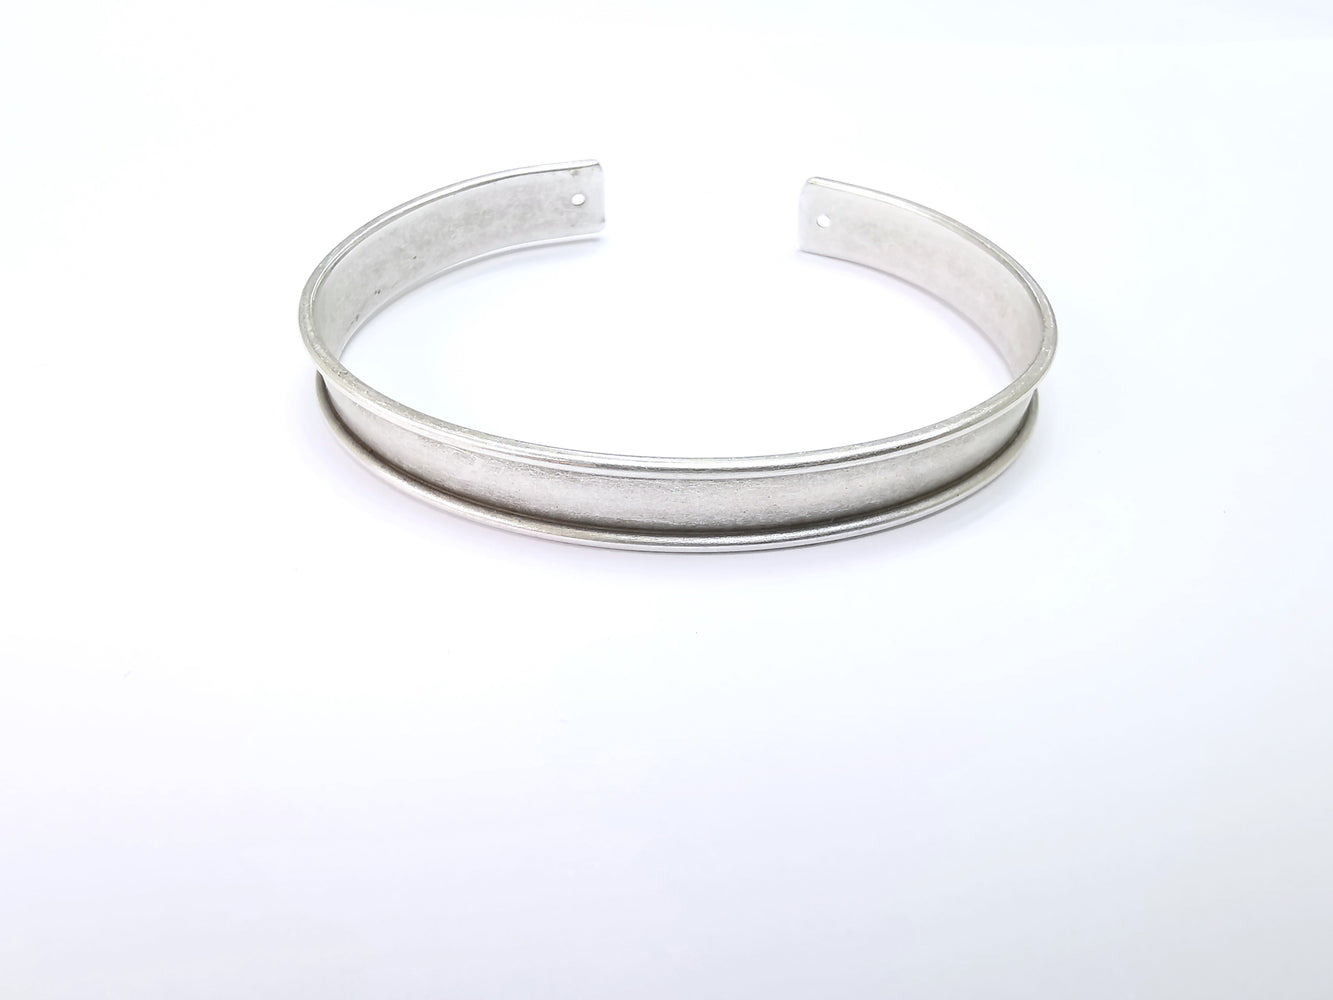 5 Bracelet Blanks Bangle Blanks Cuff Blanks Adjustable Bracelet Blank Antique Silver Plated Brass ( 10mm Blanks ) G17553